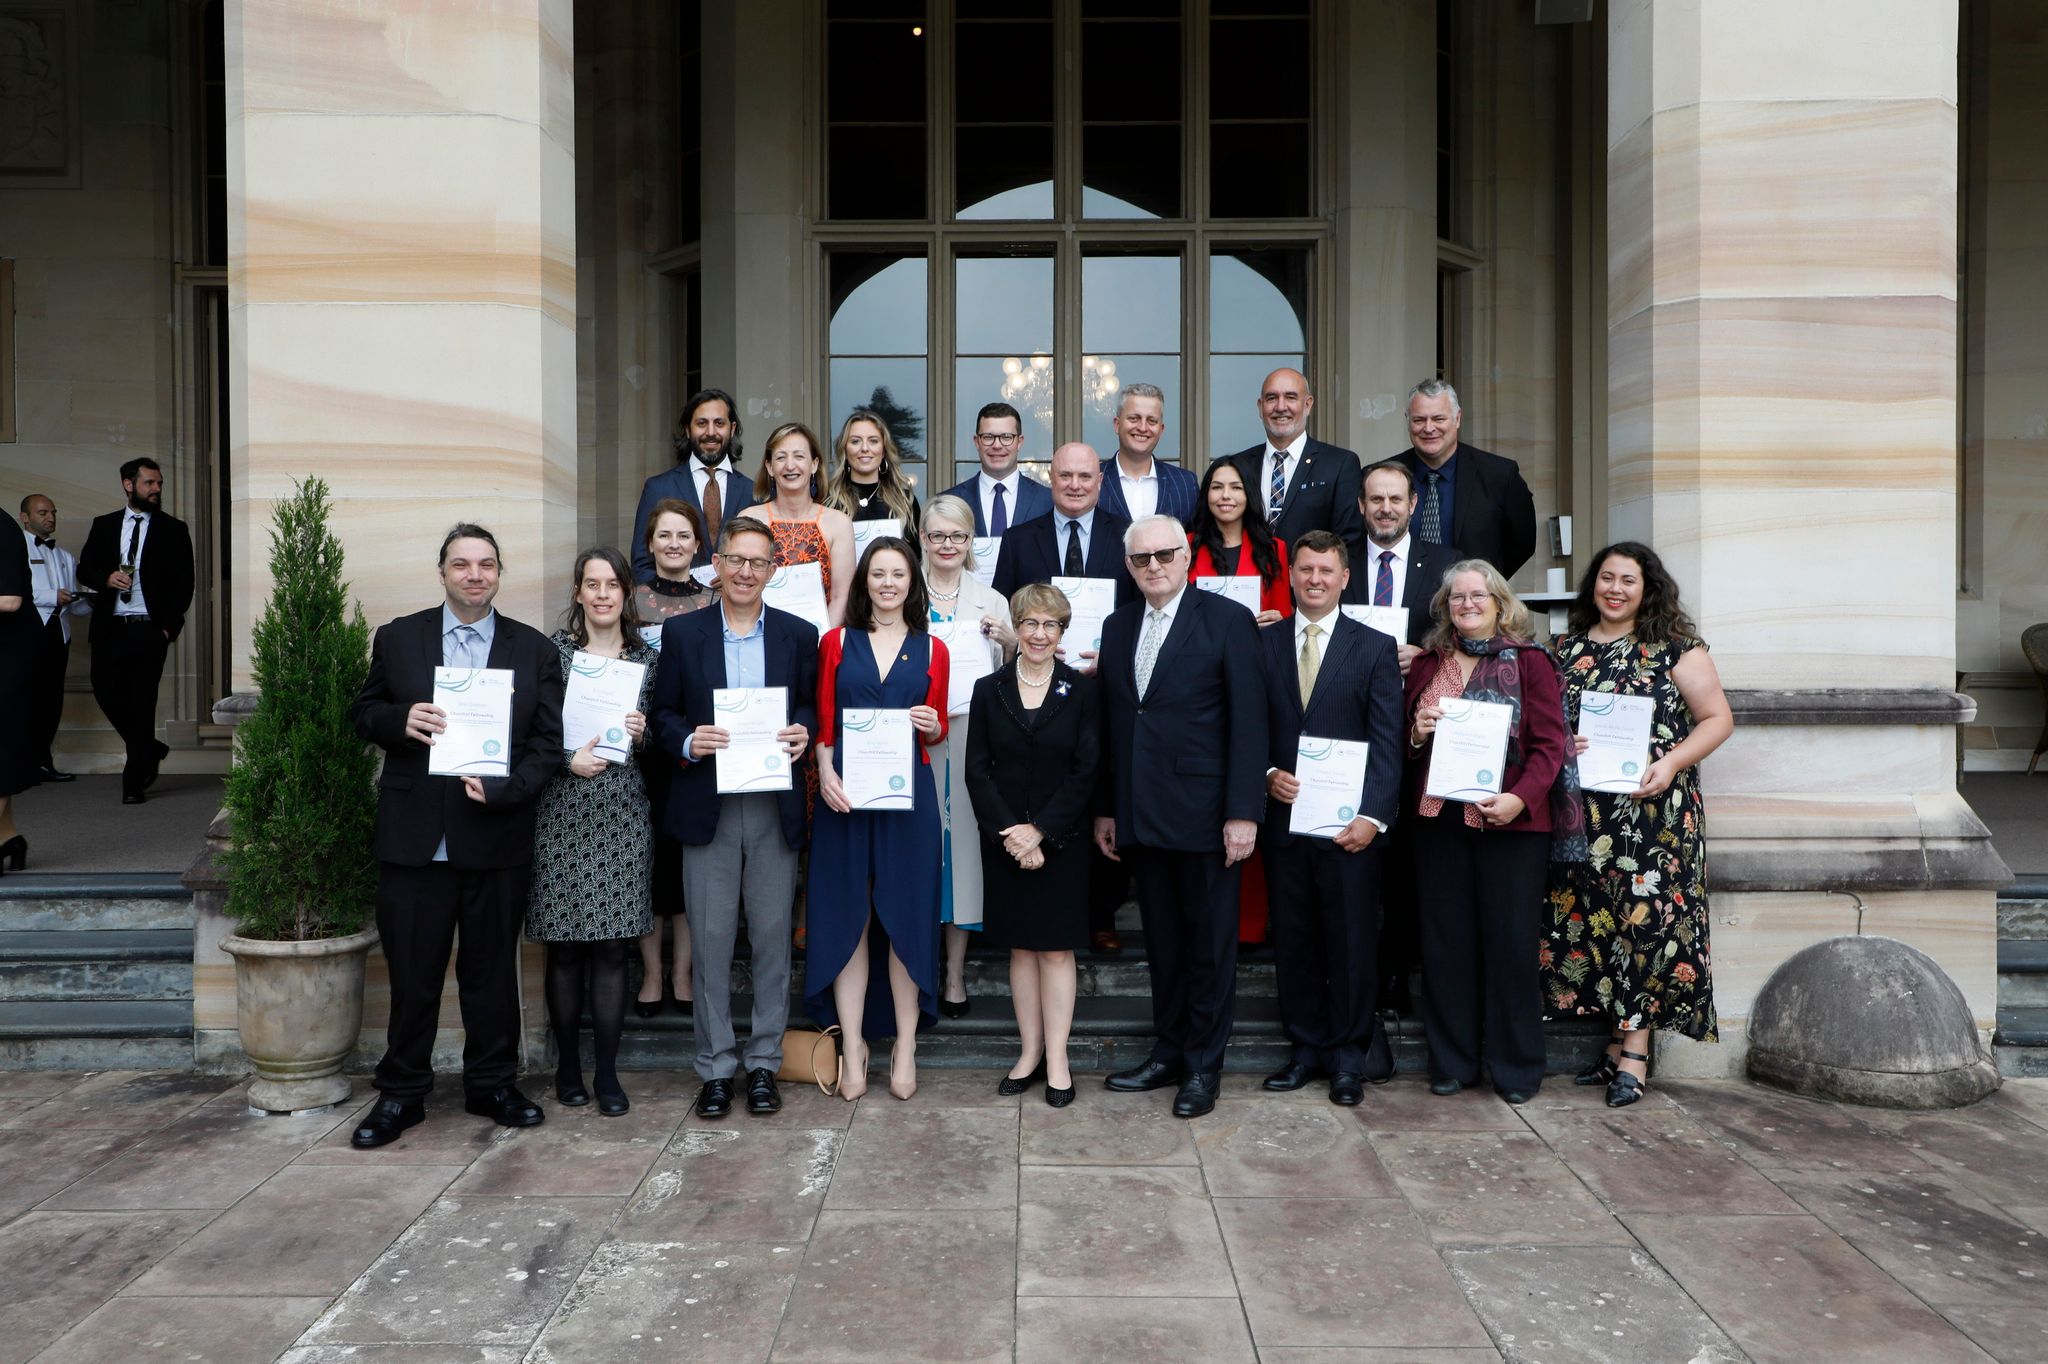 Congratulations to the 2022 NSW Fellows